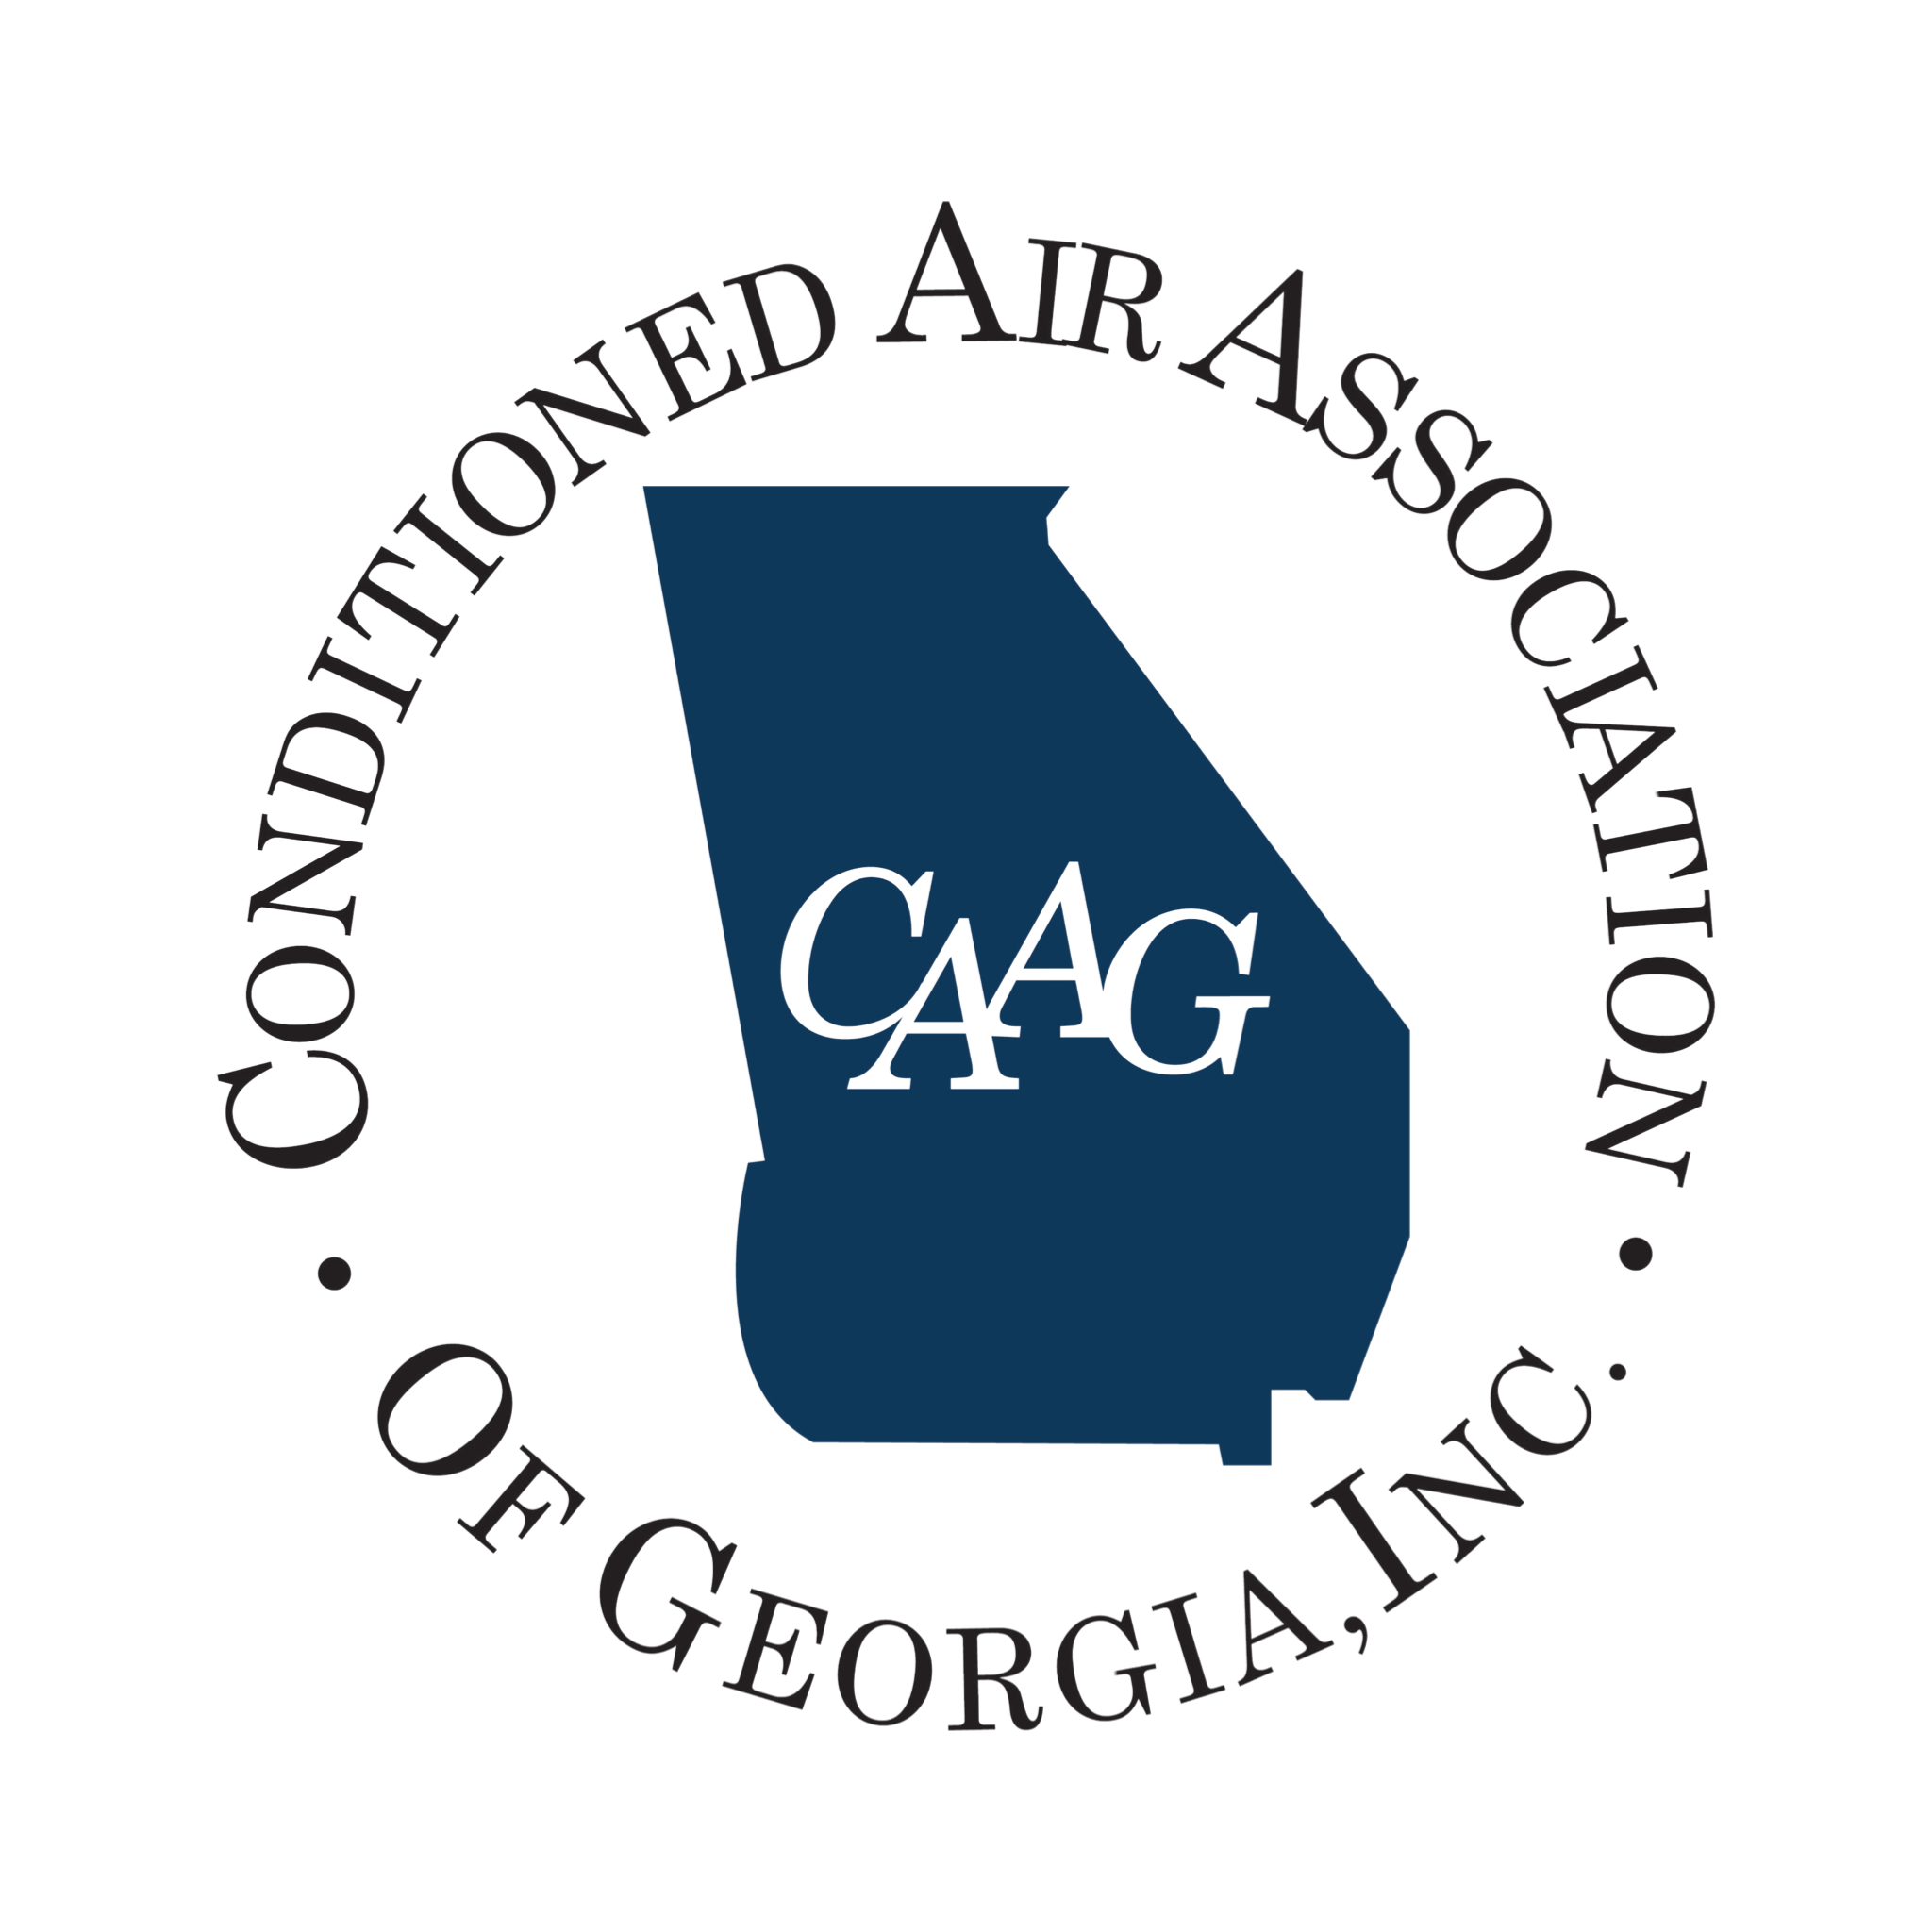 Conditioned Air Association of Georgia (CAAG) Partner Description